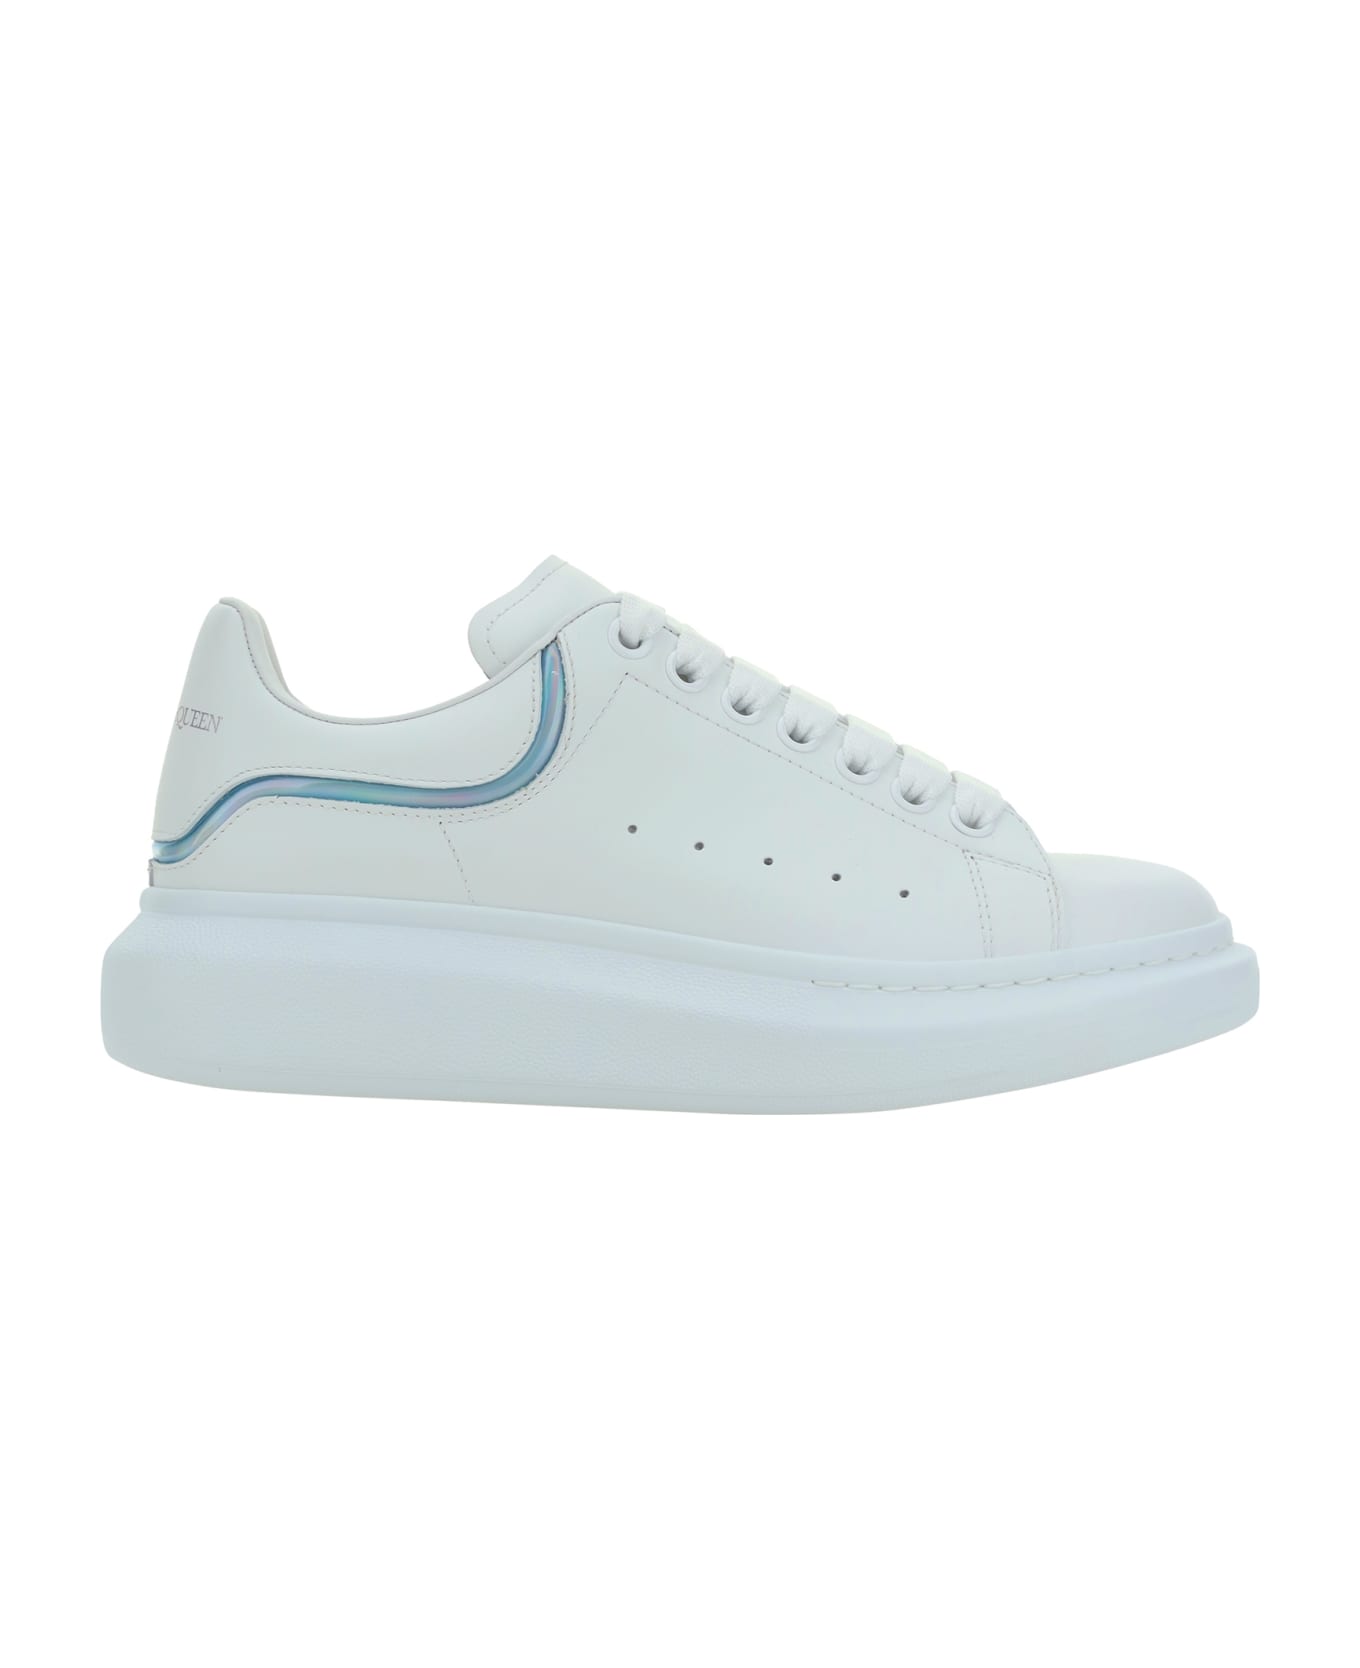 Alexander McQueen Oversize Sneakers - White/paradise Blue スニーカー